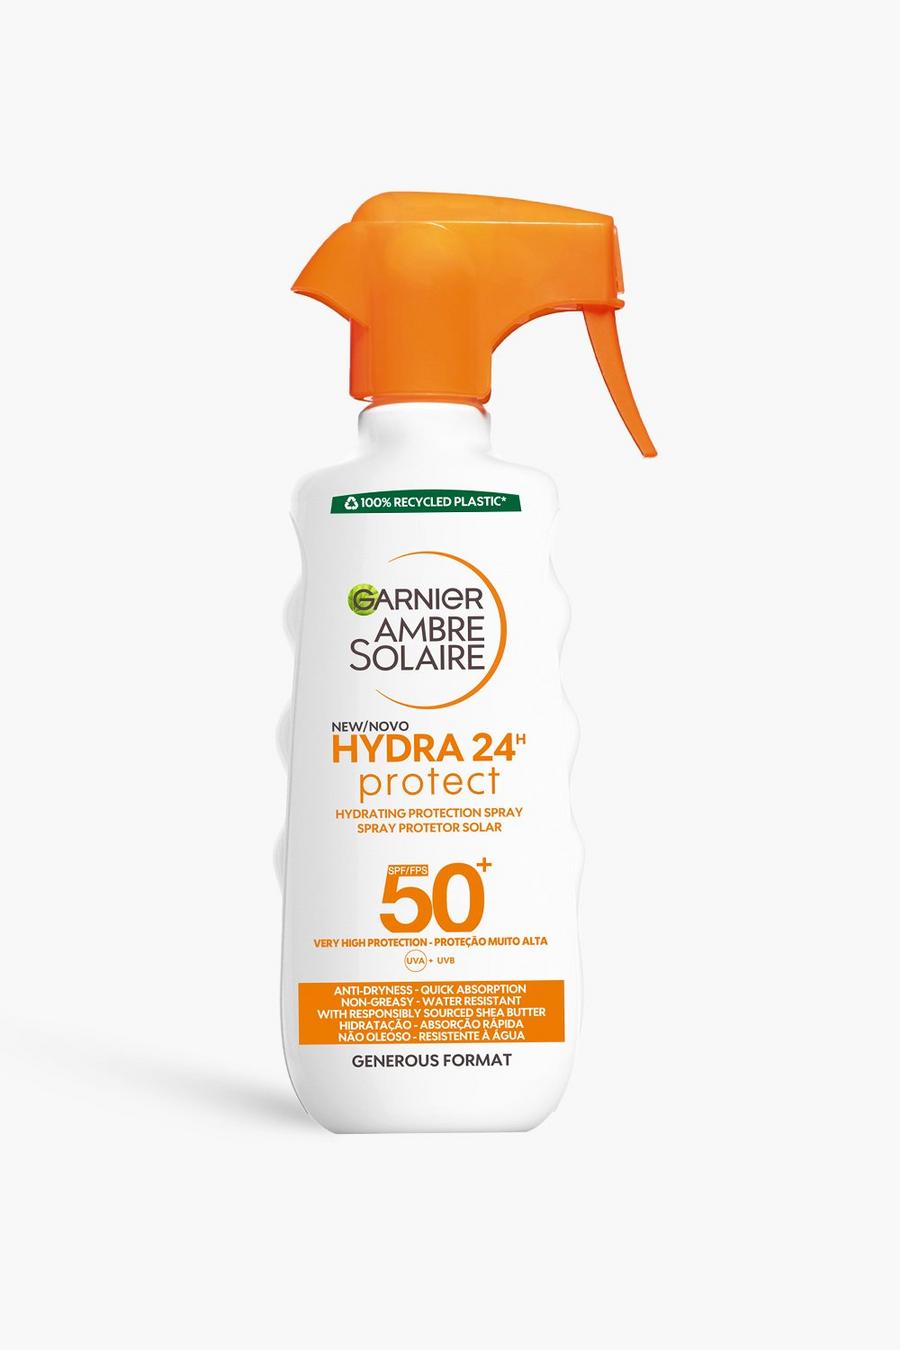 Garnier - Ambre solaire spray hydratant protection 24h SPF 50 - 300ml, White weiß